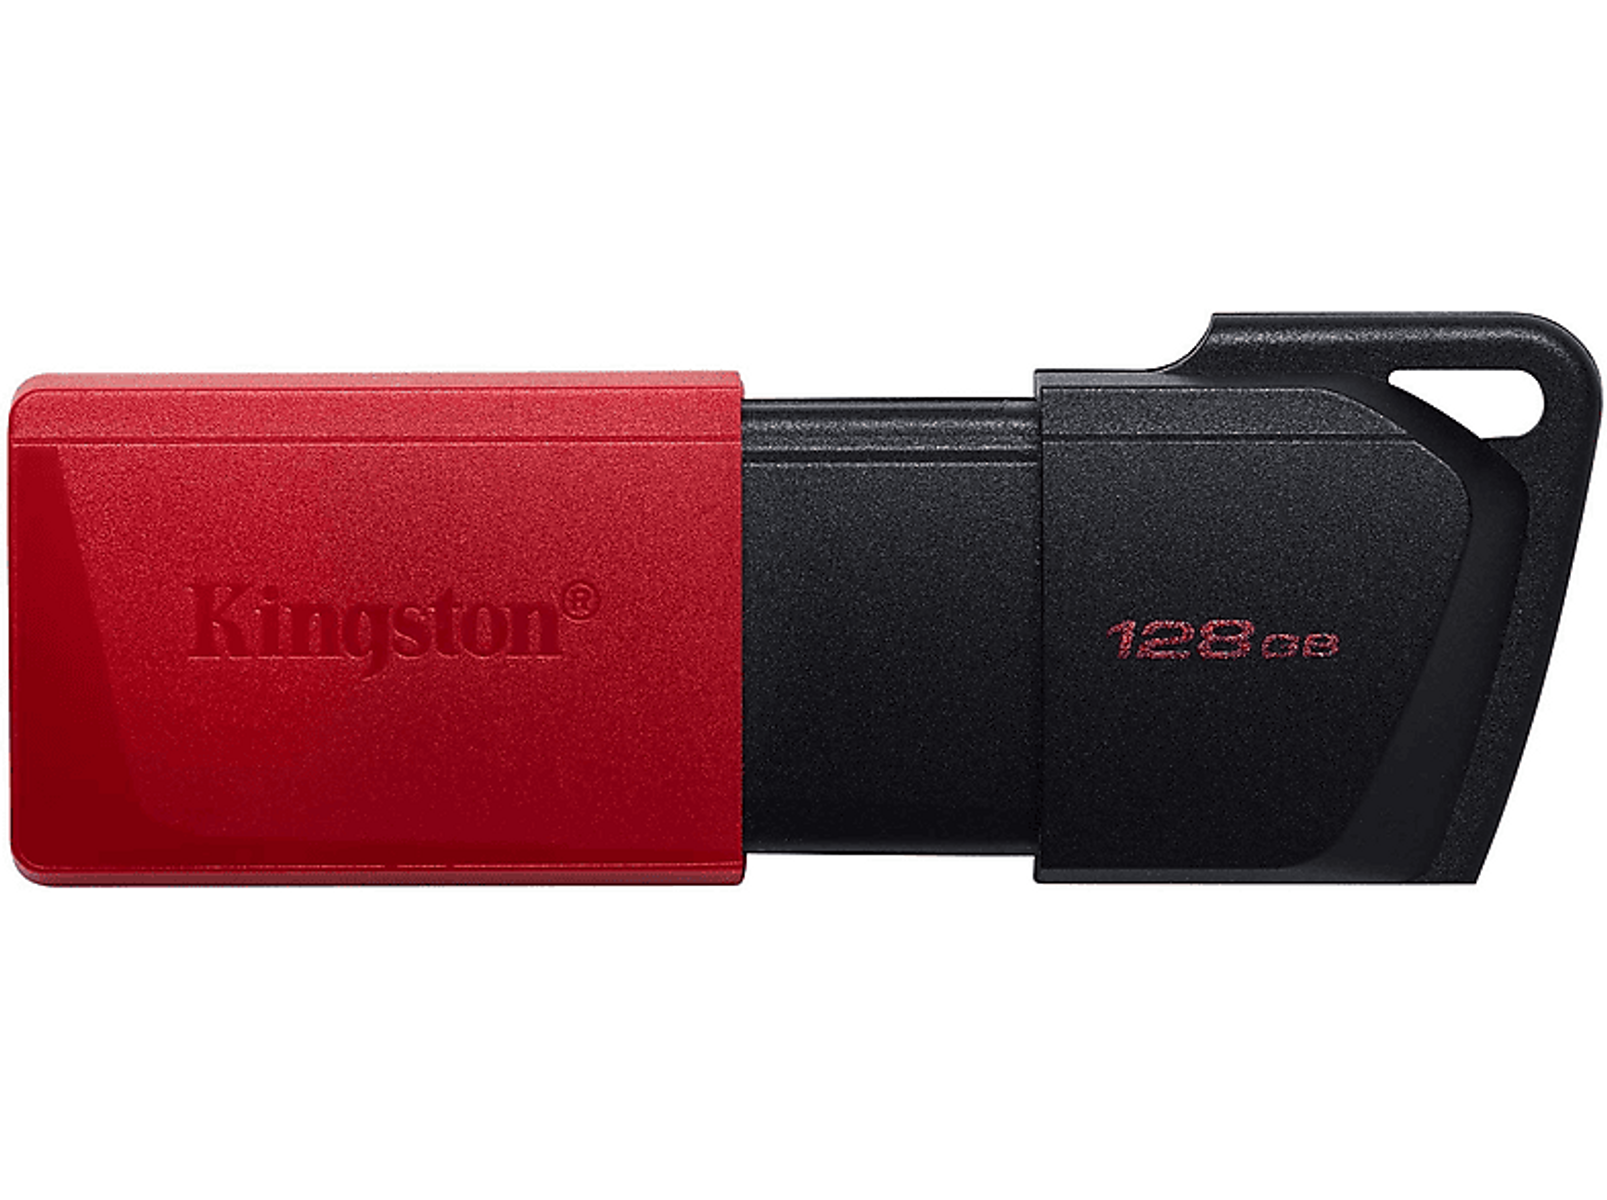 GB) (Schwarz, DTXM/128GB KINGSTON USB-Flash-Laufwerk TECHNOLOGY 128